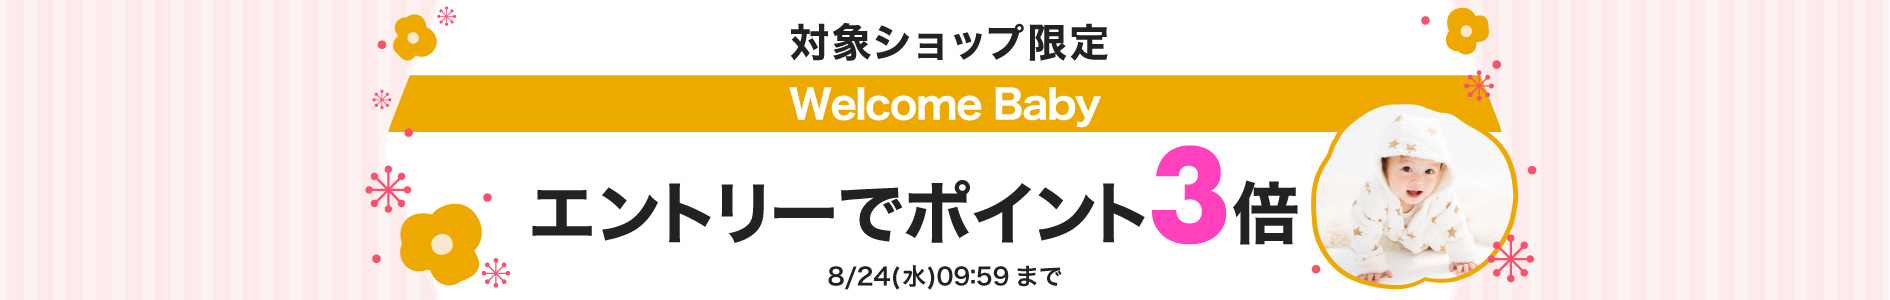 WelcomeBaby3倍キャンペーン